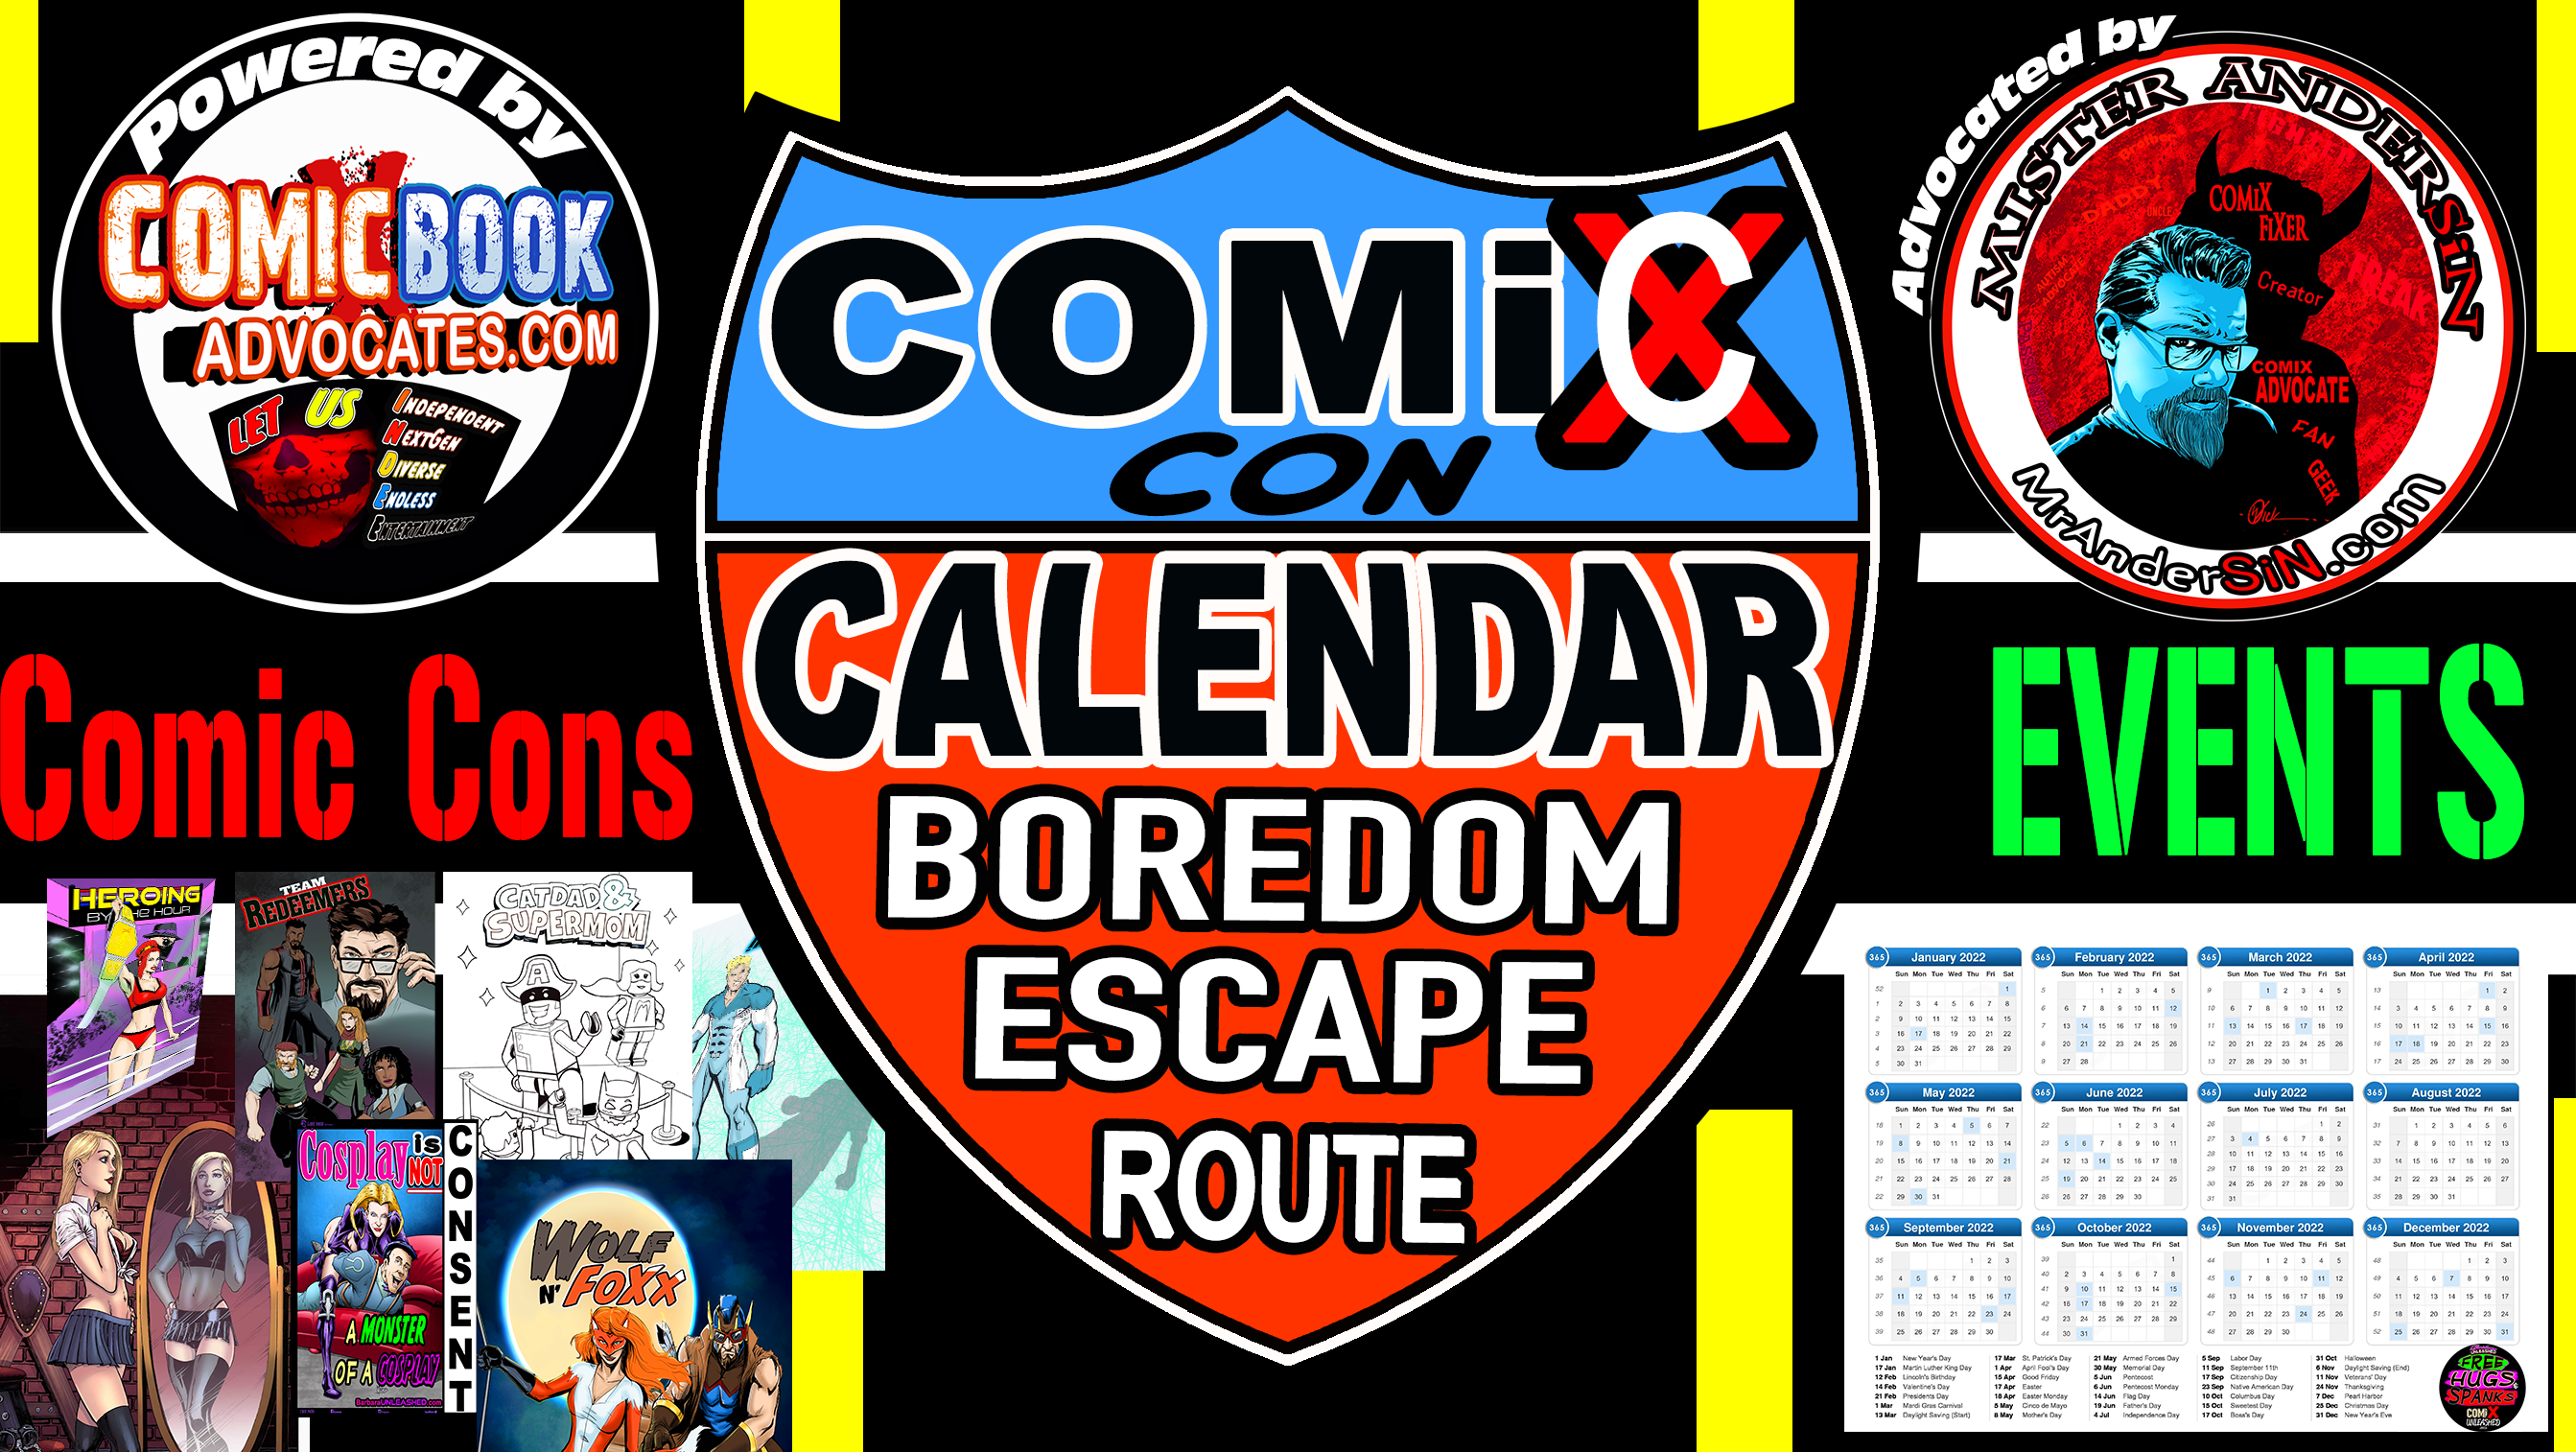 Comic Book ADVOCATES Presents: The COMiX Con CALENDAR